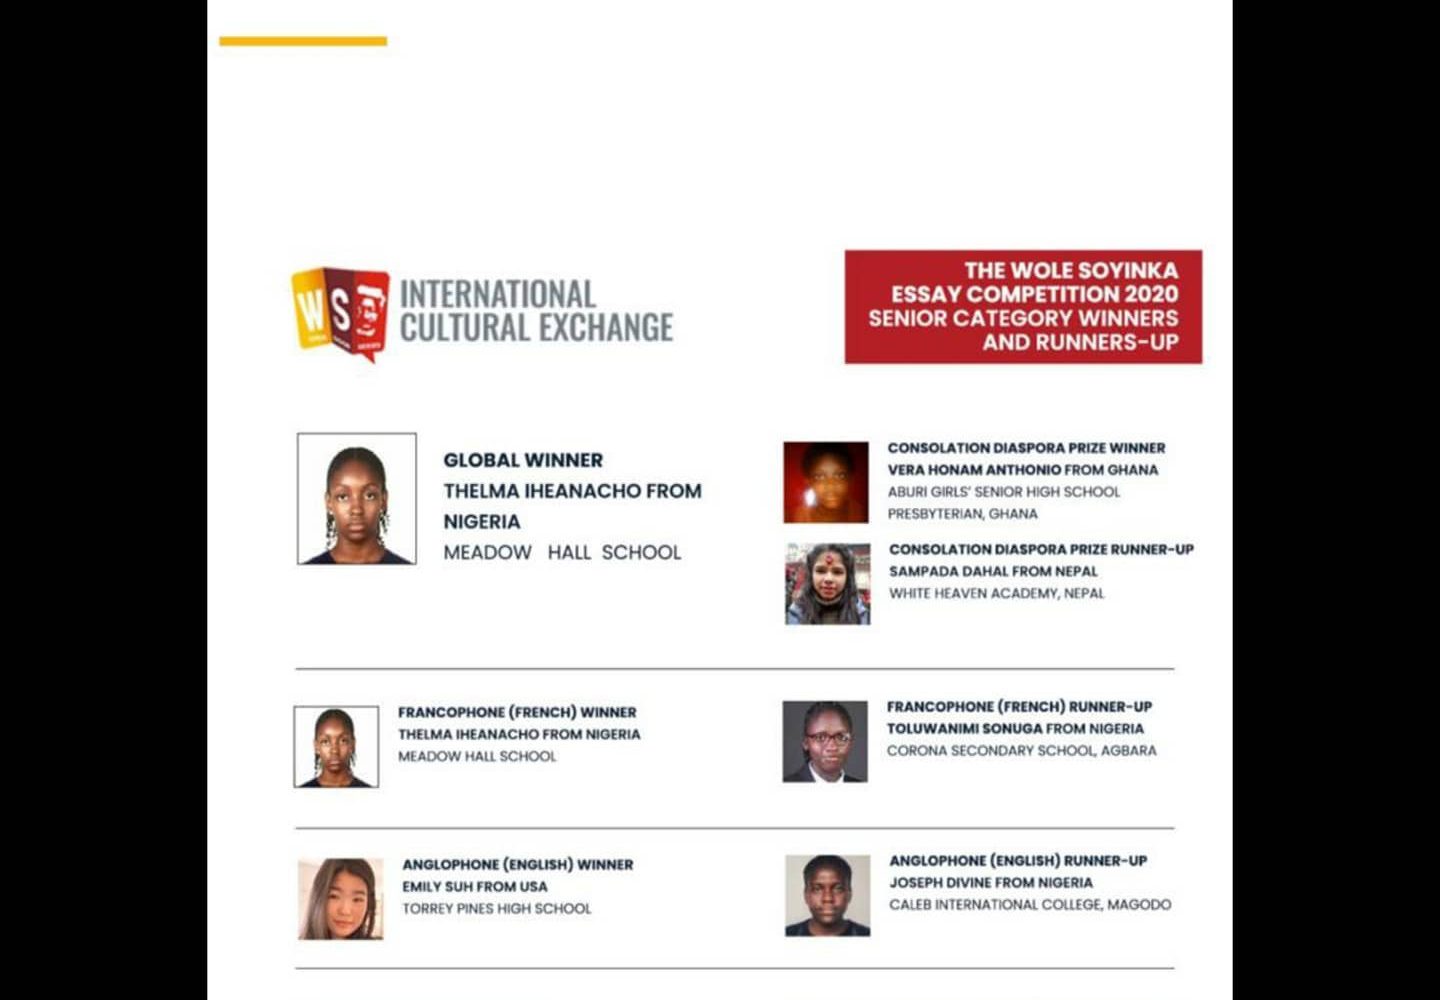 Alliance Française de Lagos' 2020 Wole Soyinka Essay Competition